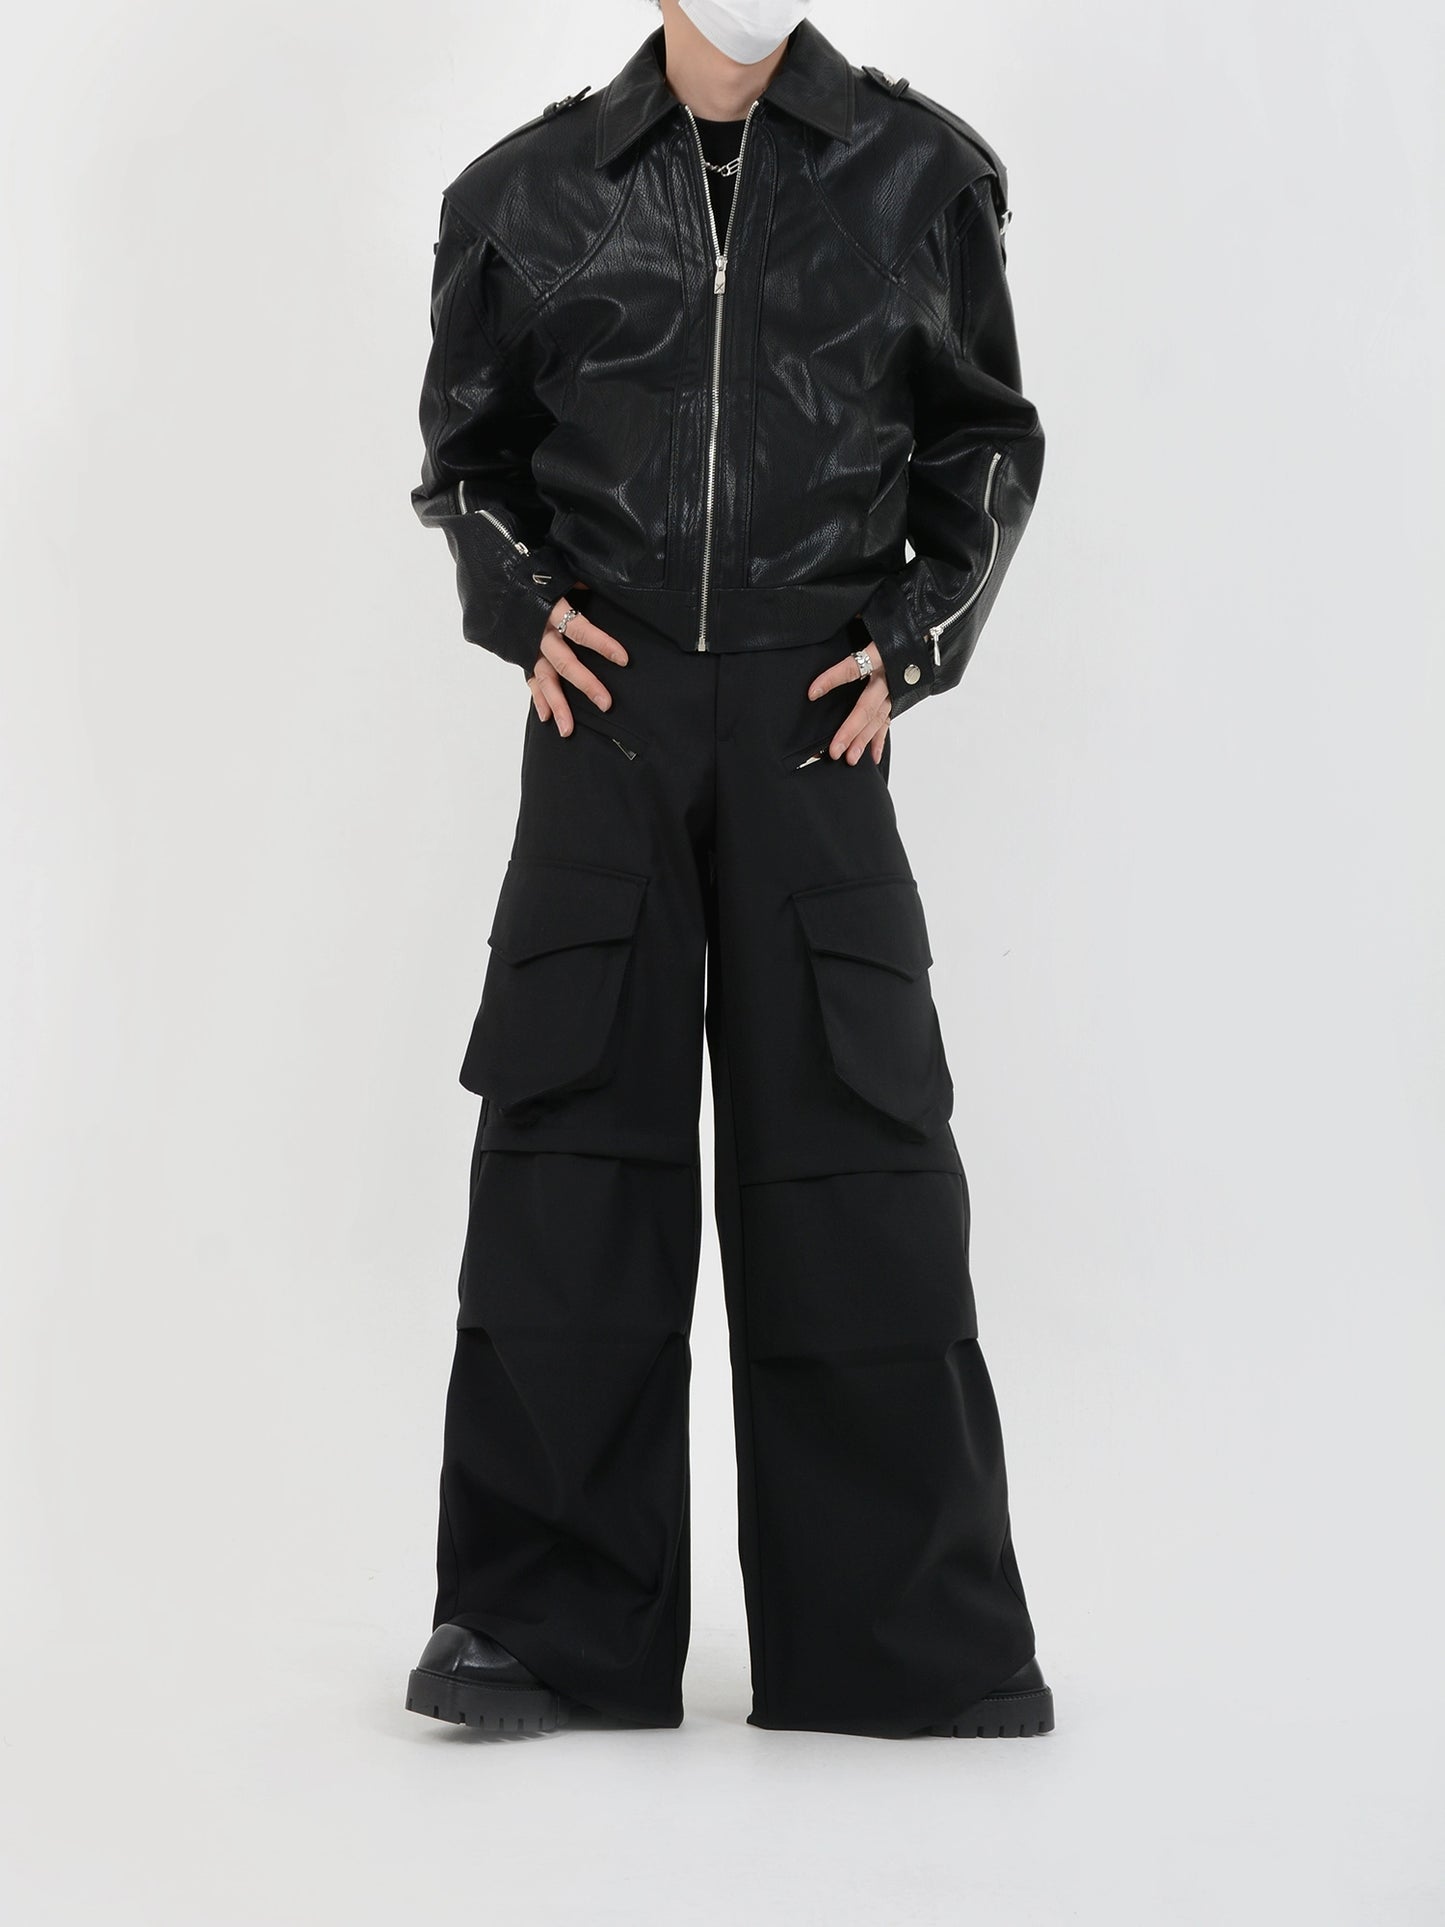 LUCE GARMENT niche deconstructed padded shoulders pu leather jacket men's design sense loose casual retro jacket trend